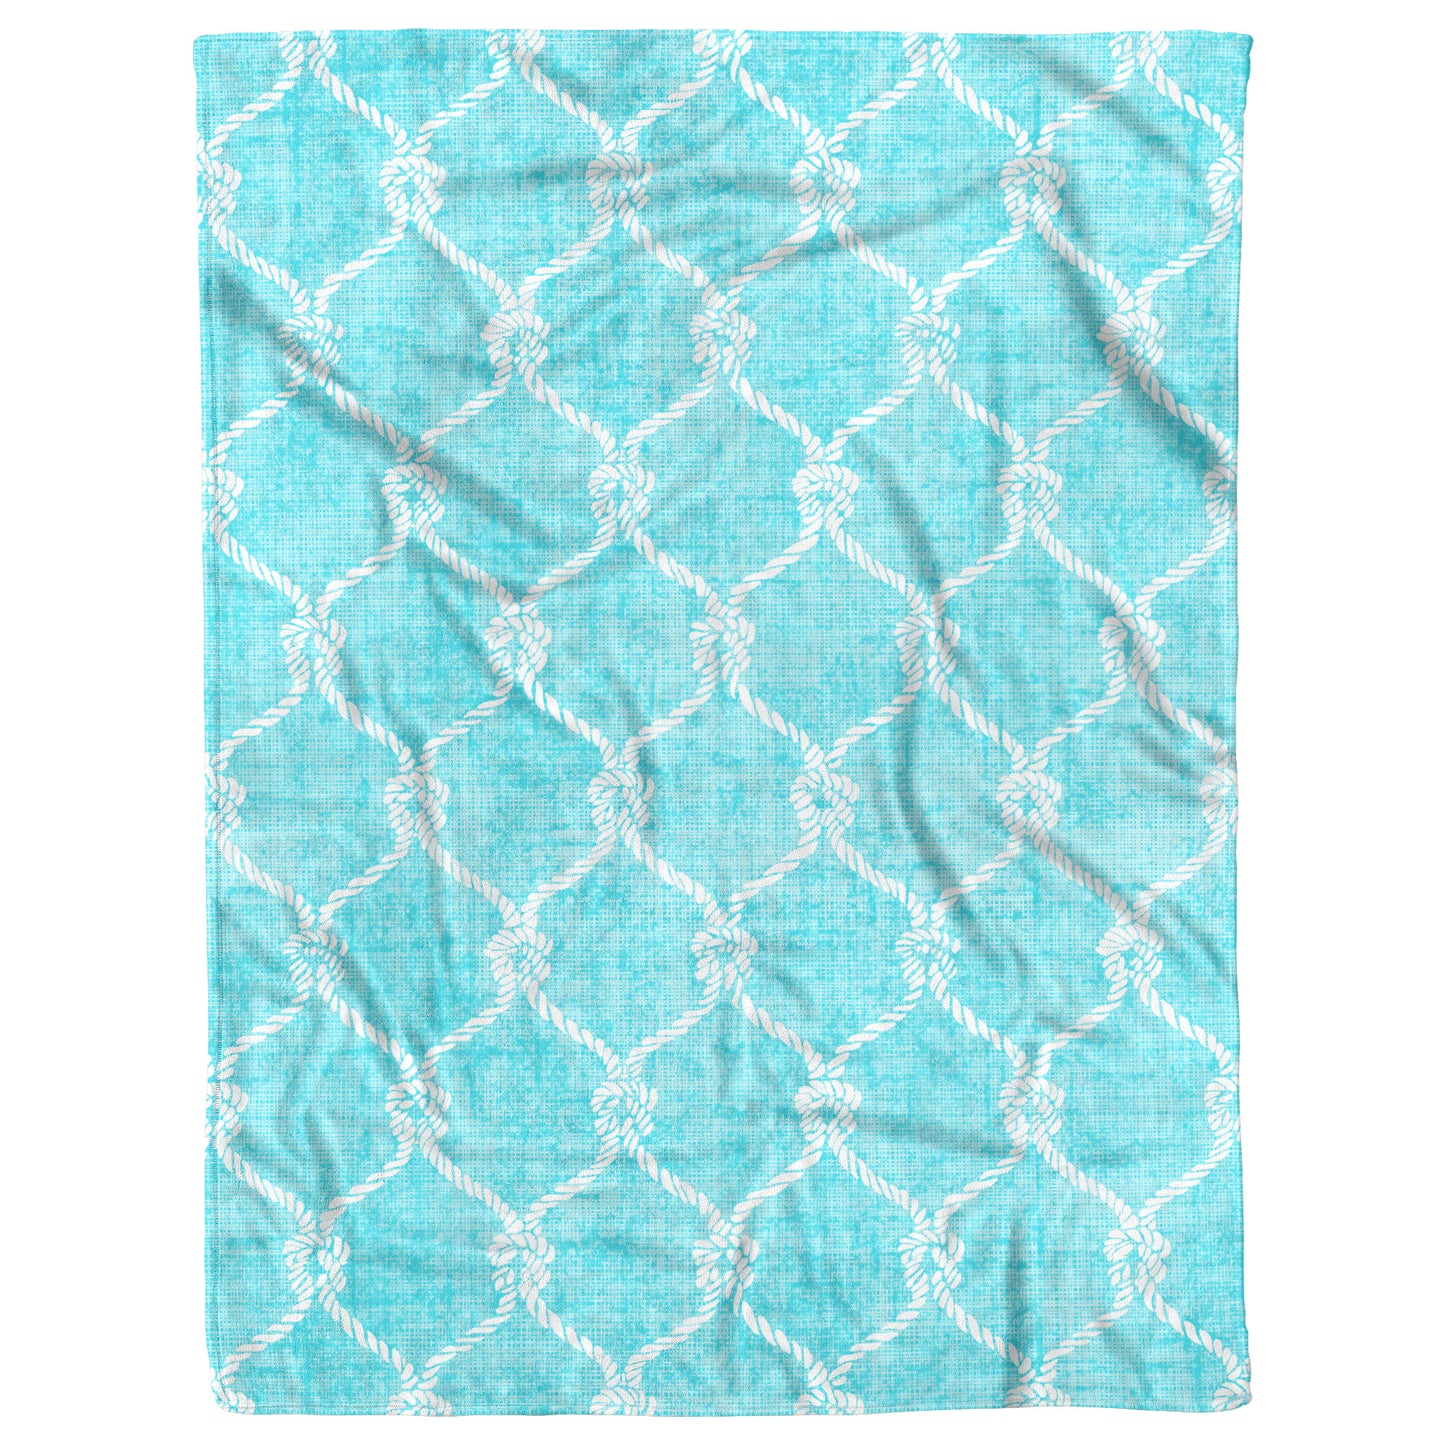 Nautical Netting on Tropical Blue Linen Texture Background, Fleece Blanket